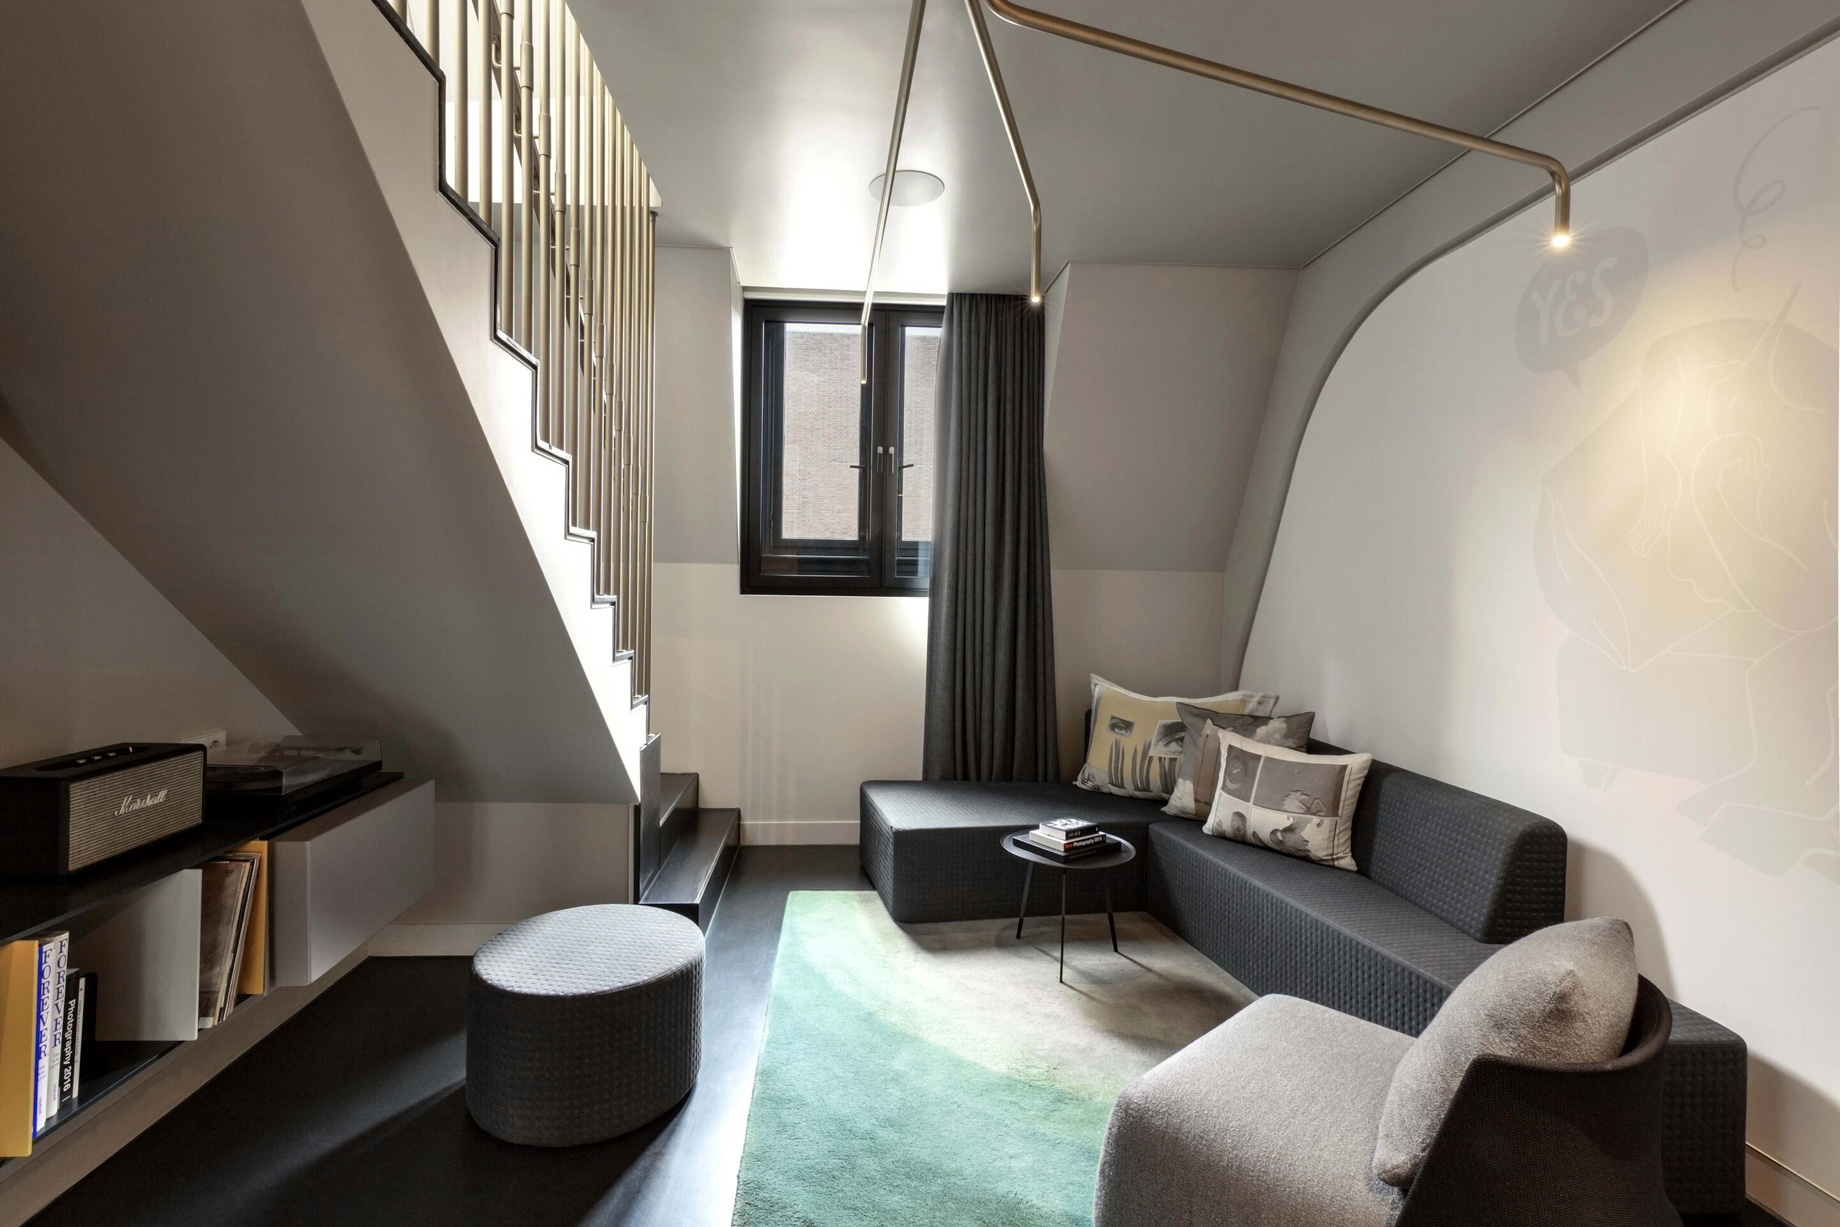 W Amsterdam Hotel – Amsterdam, Netherlands – Marvelous Bank One Bedroom Bi Level Loft Sitting Area